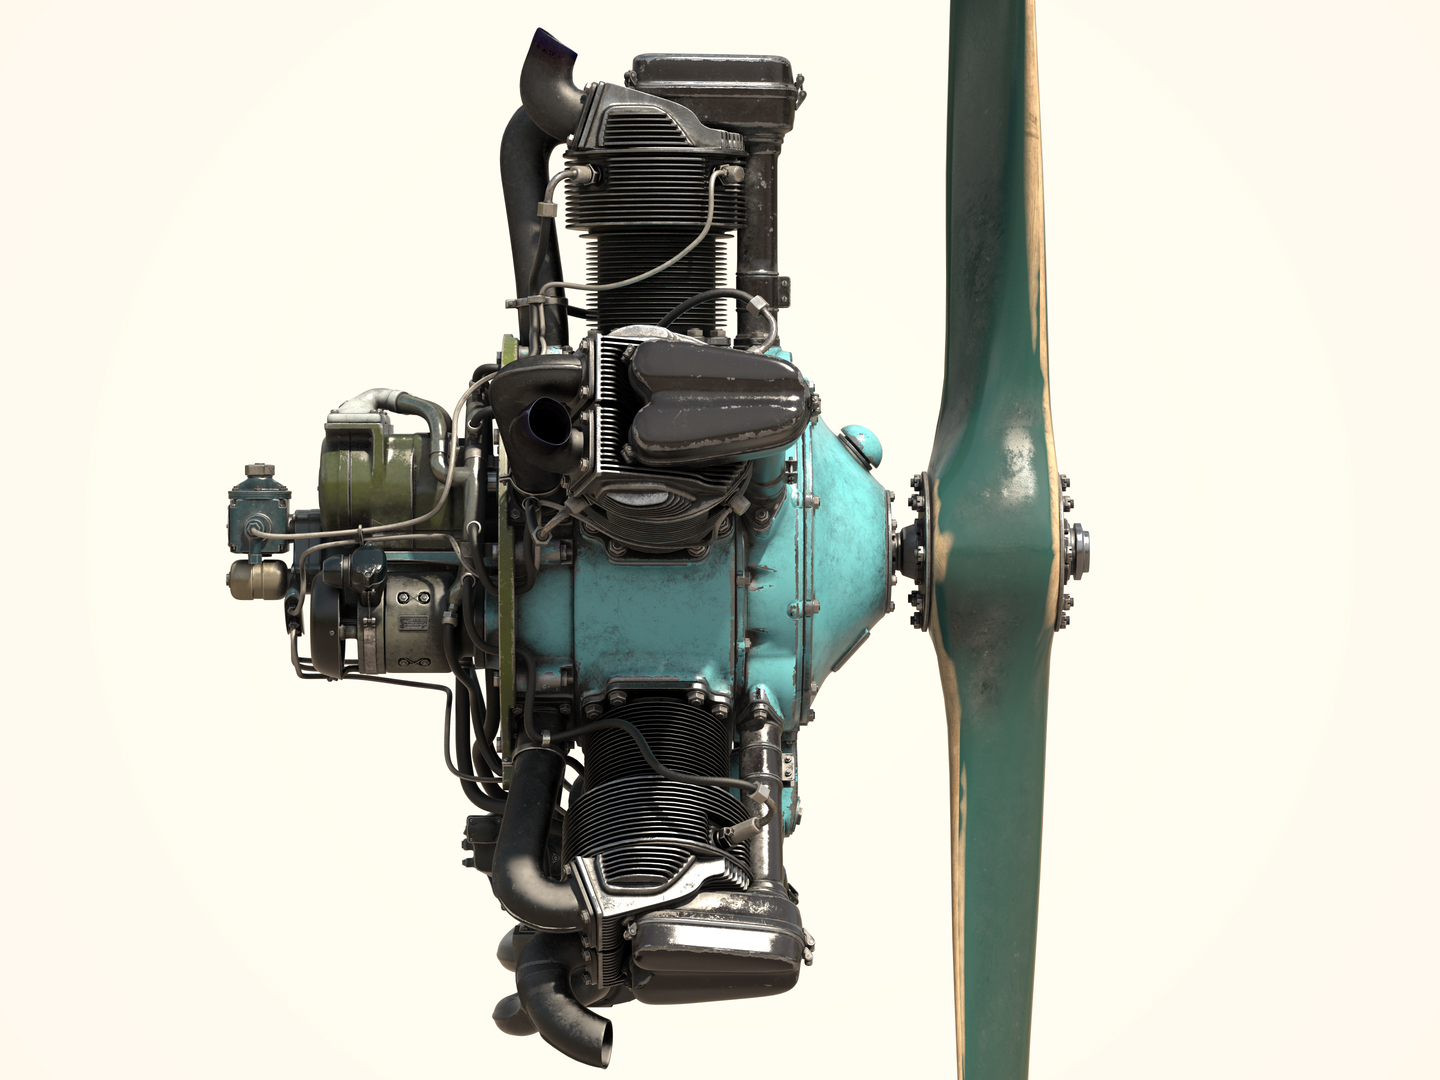 imagen de Motor de avión modelo M-11 3D en 3d max vray 2.5